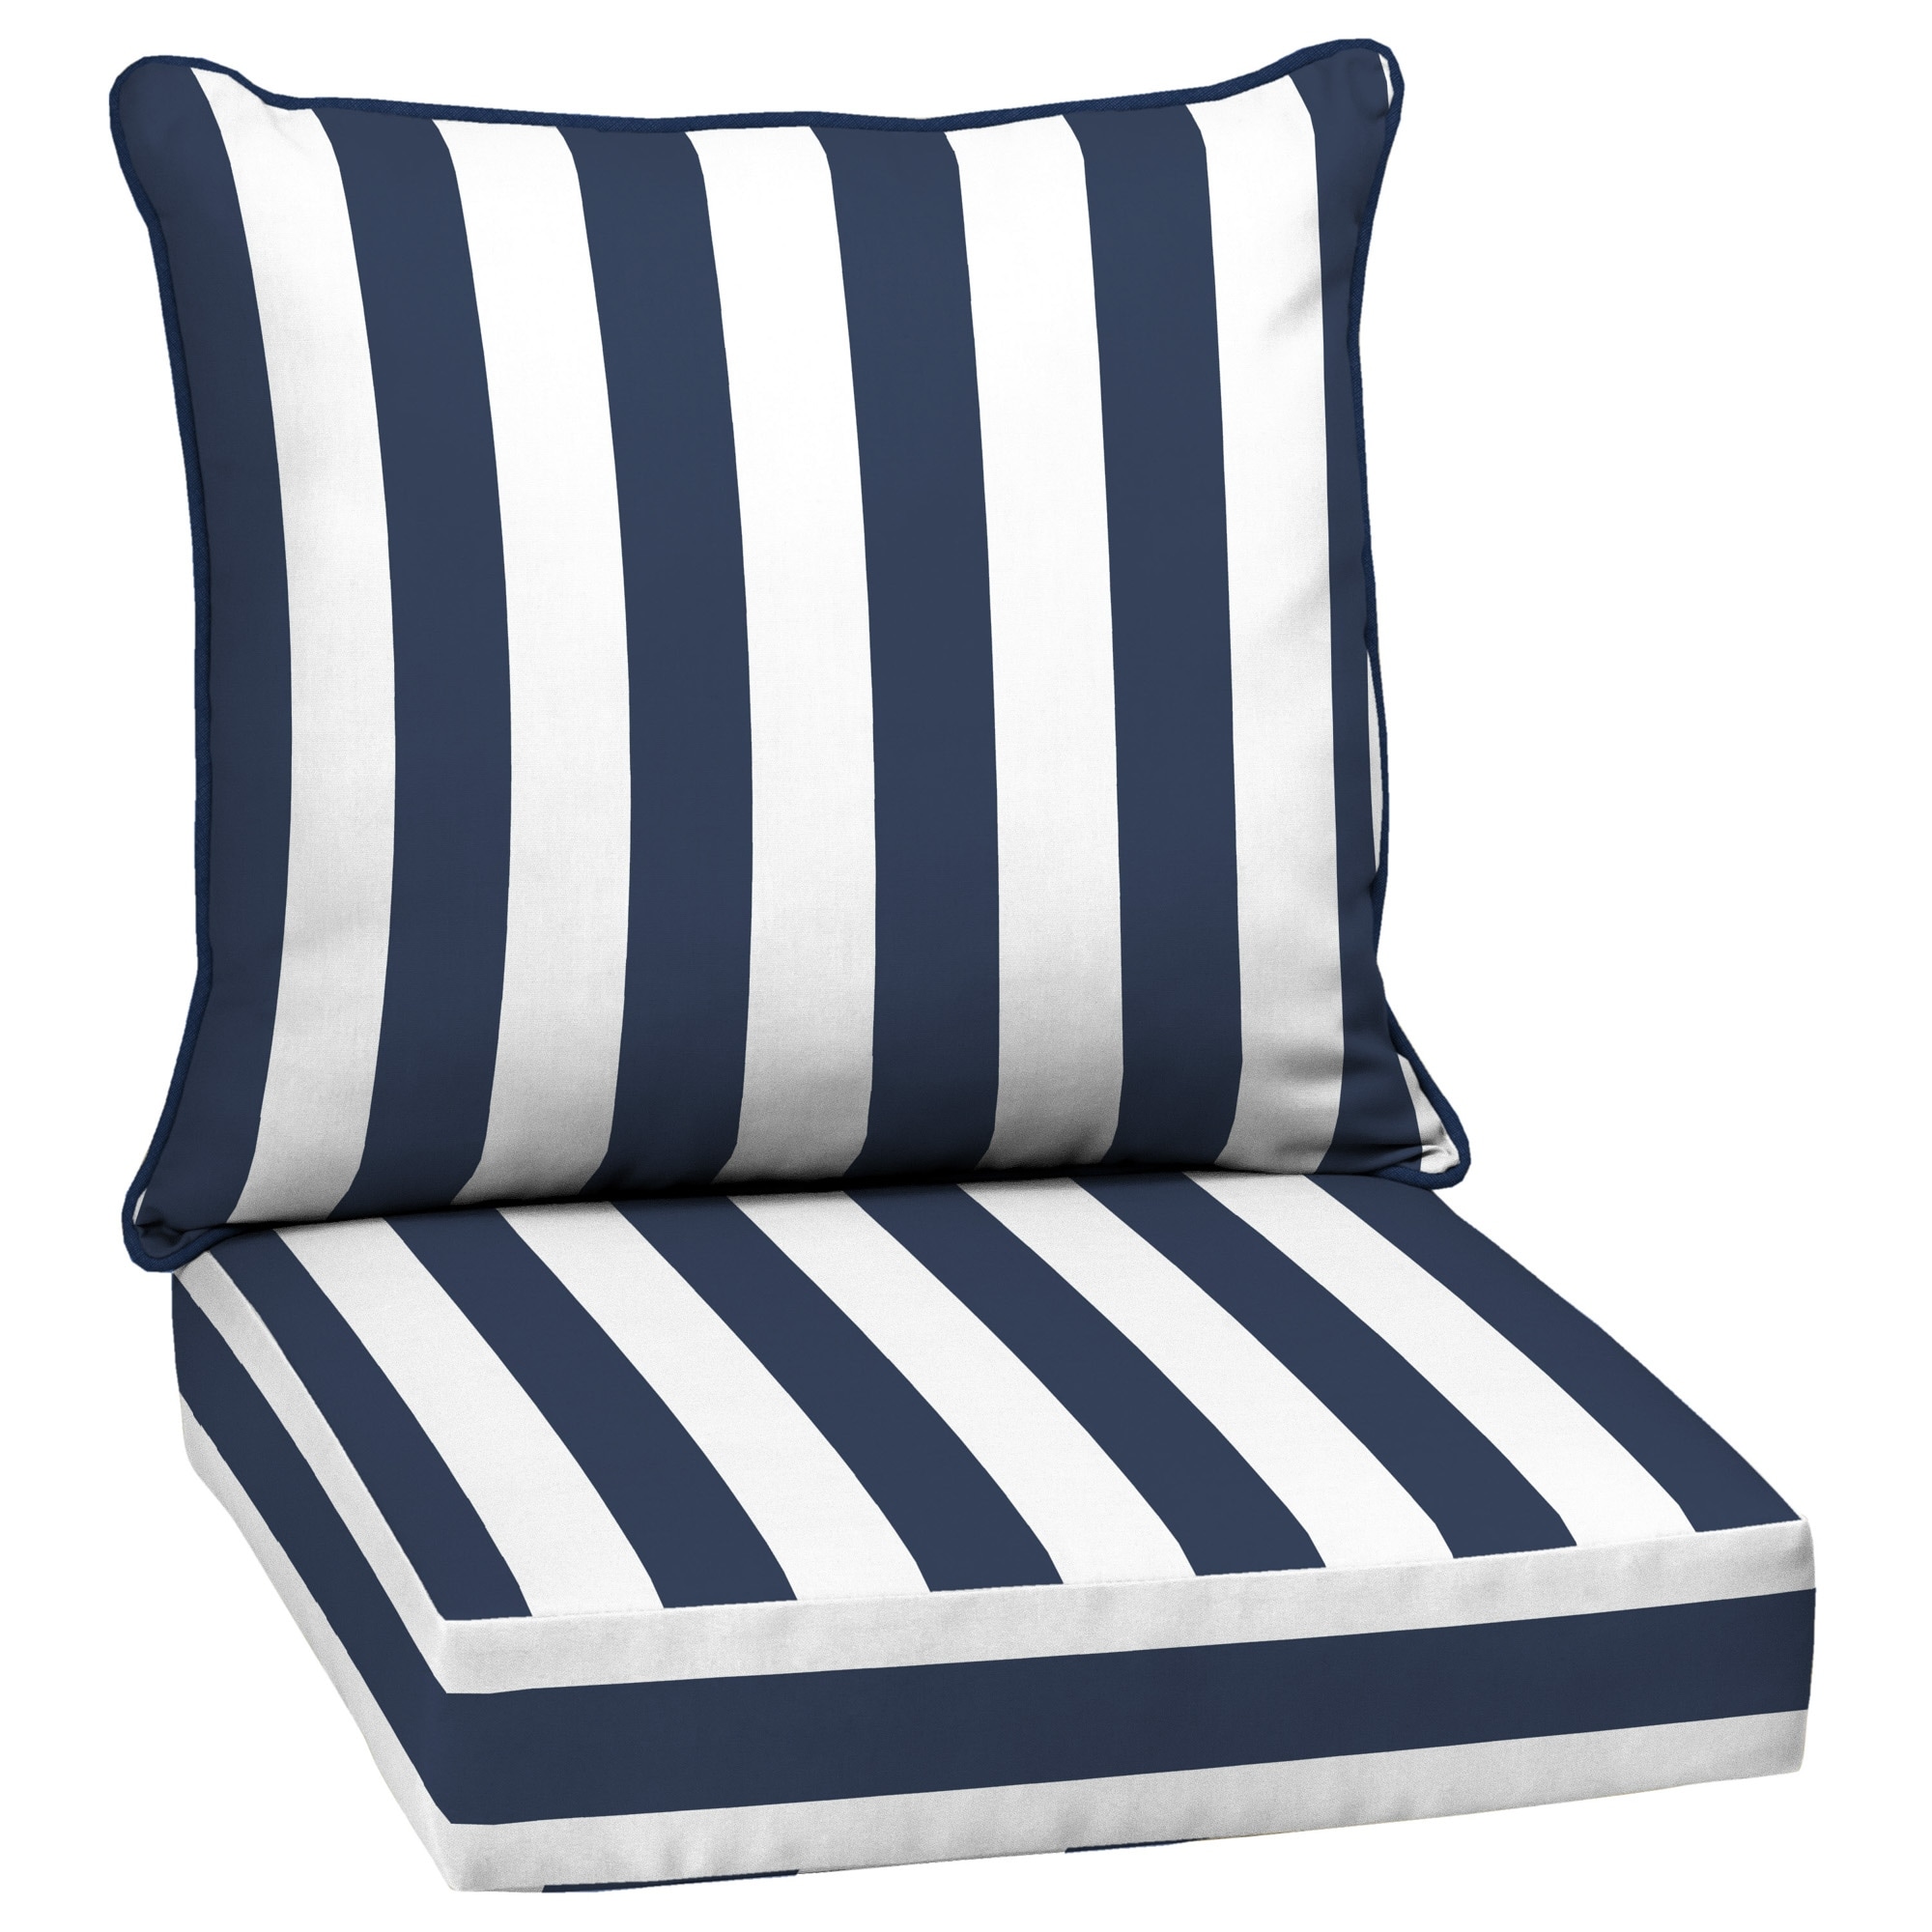 Clark Deep Seat Outdoor Cushion Set - Arden Selections